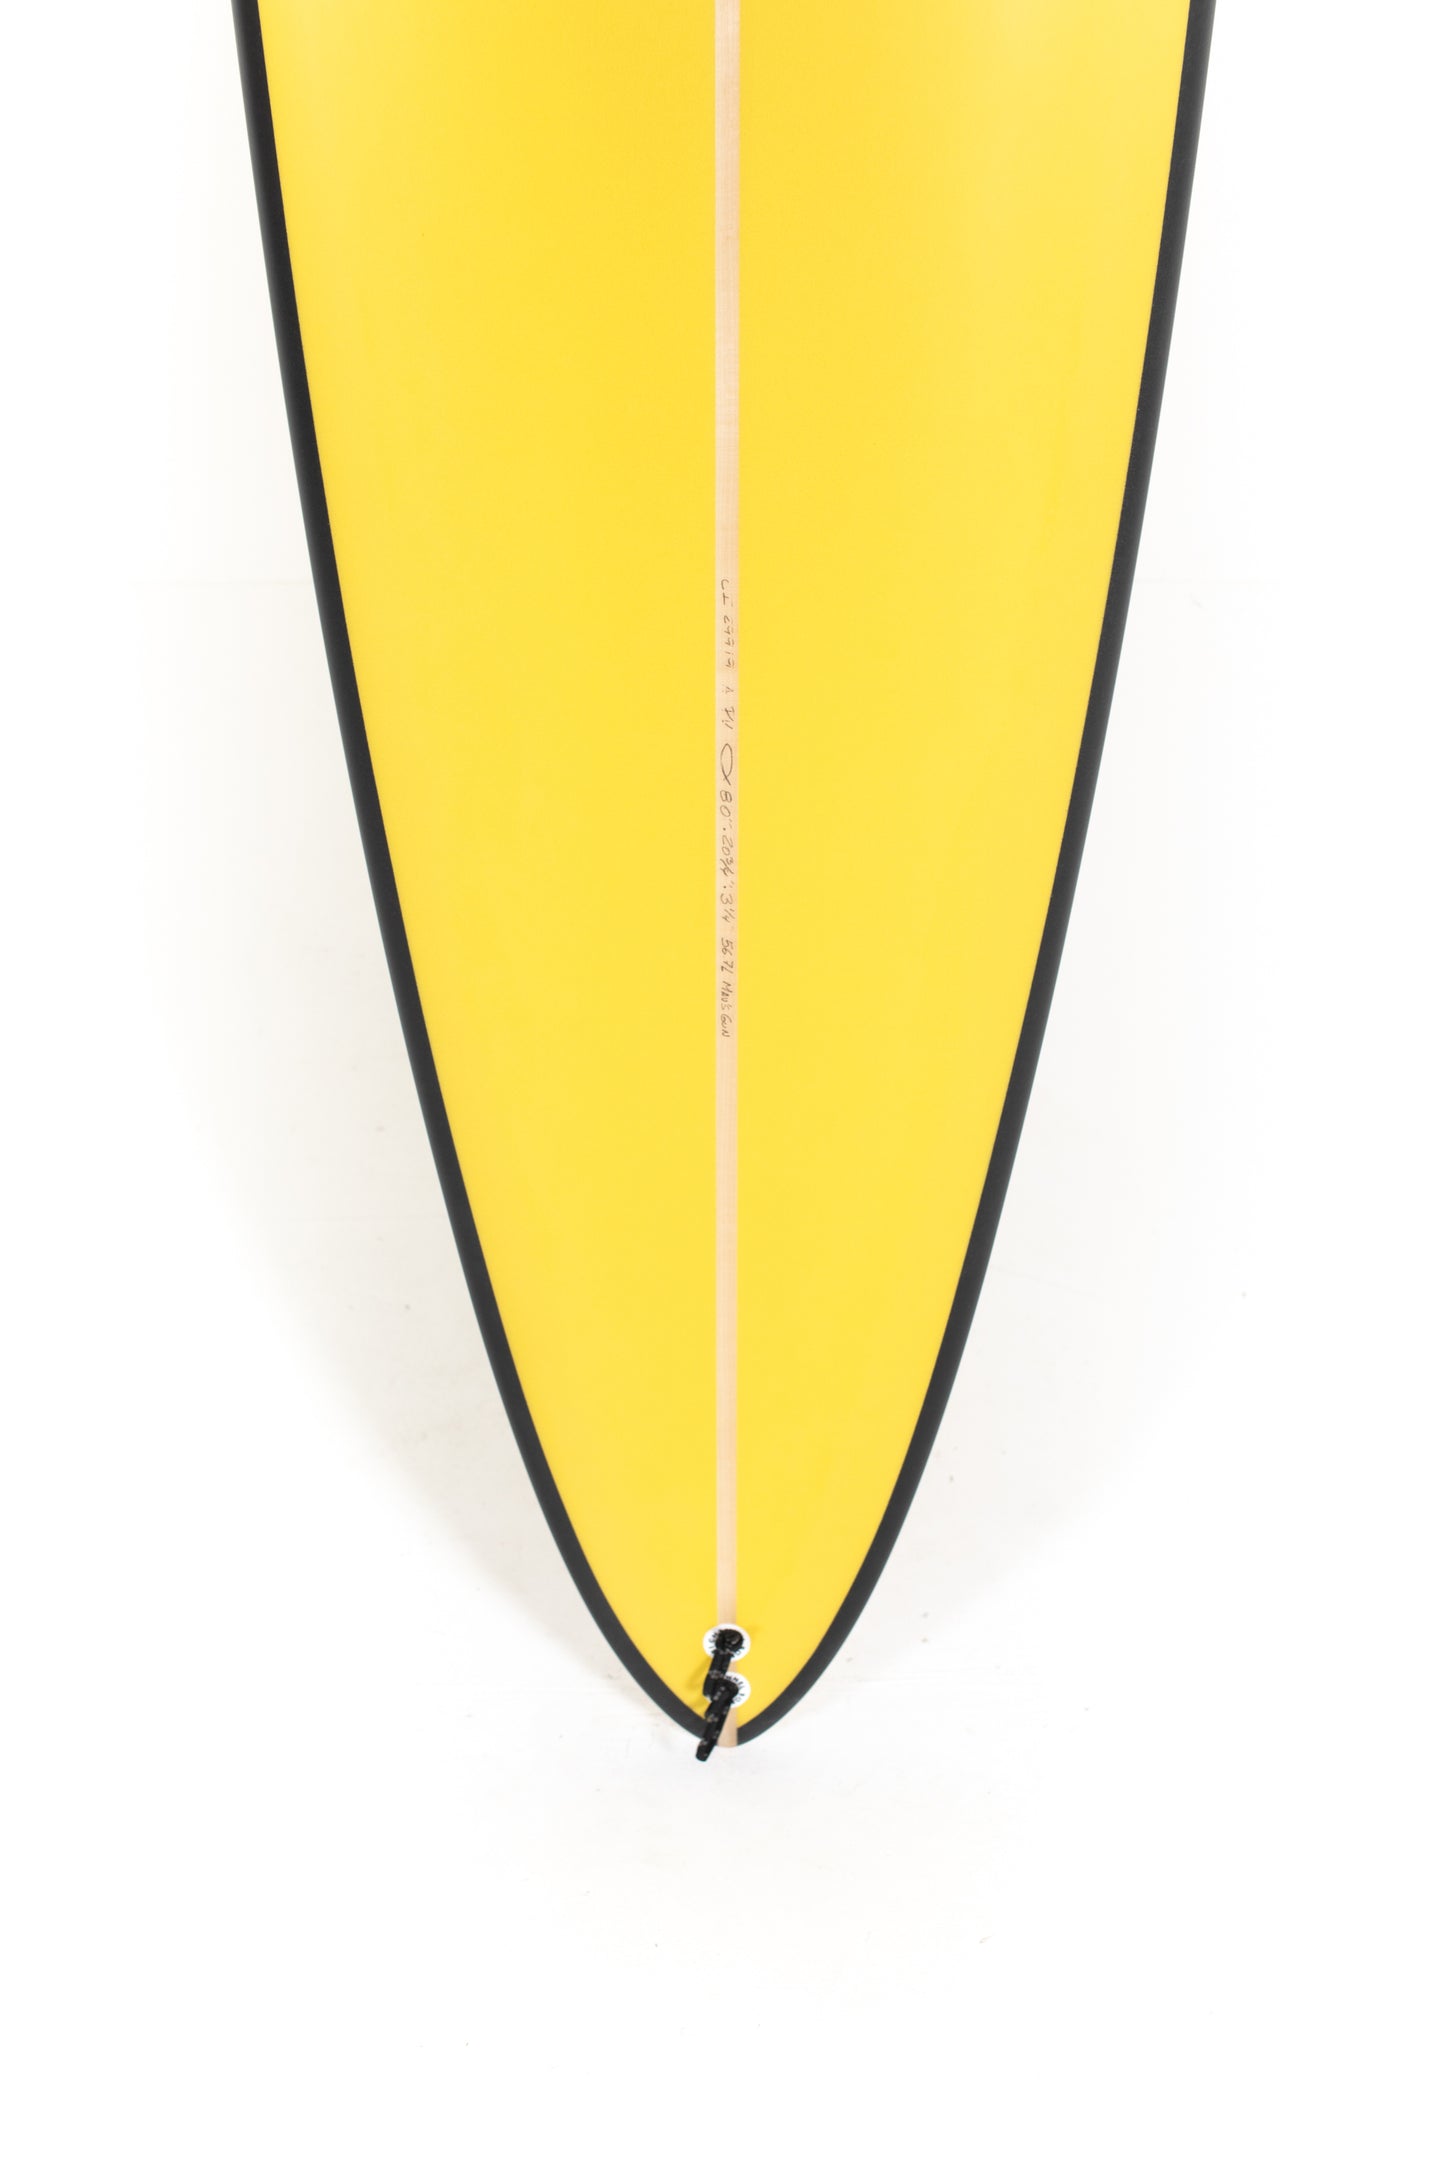 
                  
                    Pukas-Surf-Shop-Channel-Island-Surfboards-Mavs-Gun-Al-Merrick-8_0
                  
                